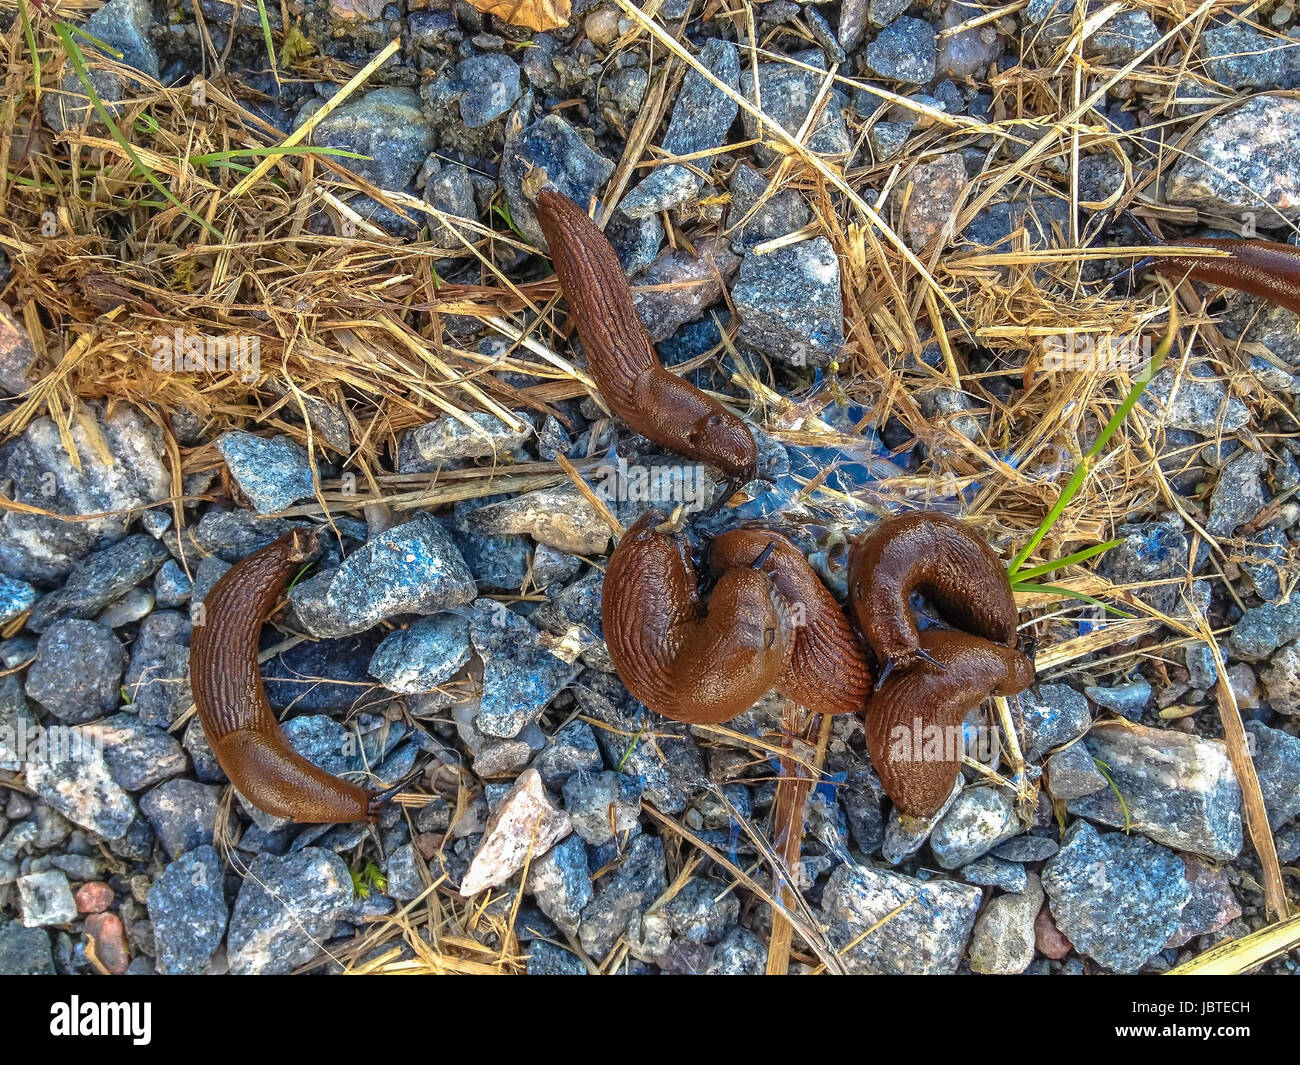 Wegschnecken bei Paarung, Arion empiricorum / Slugs mating, Arion empiricorum Stock Photo